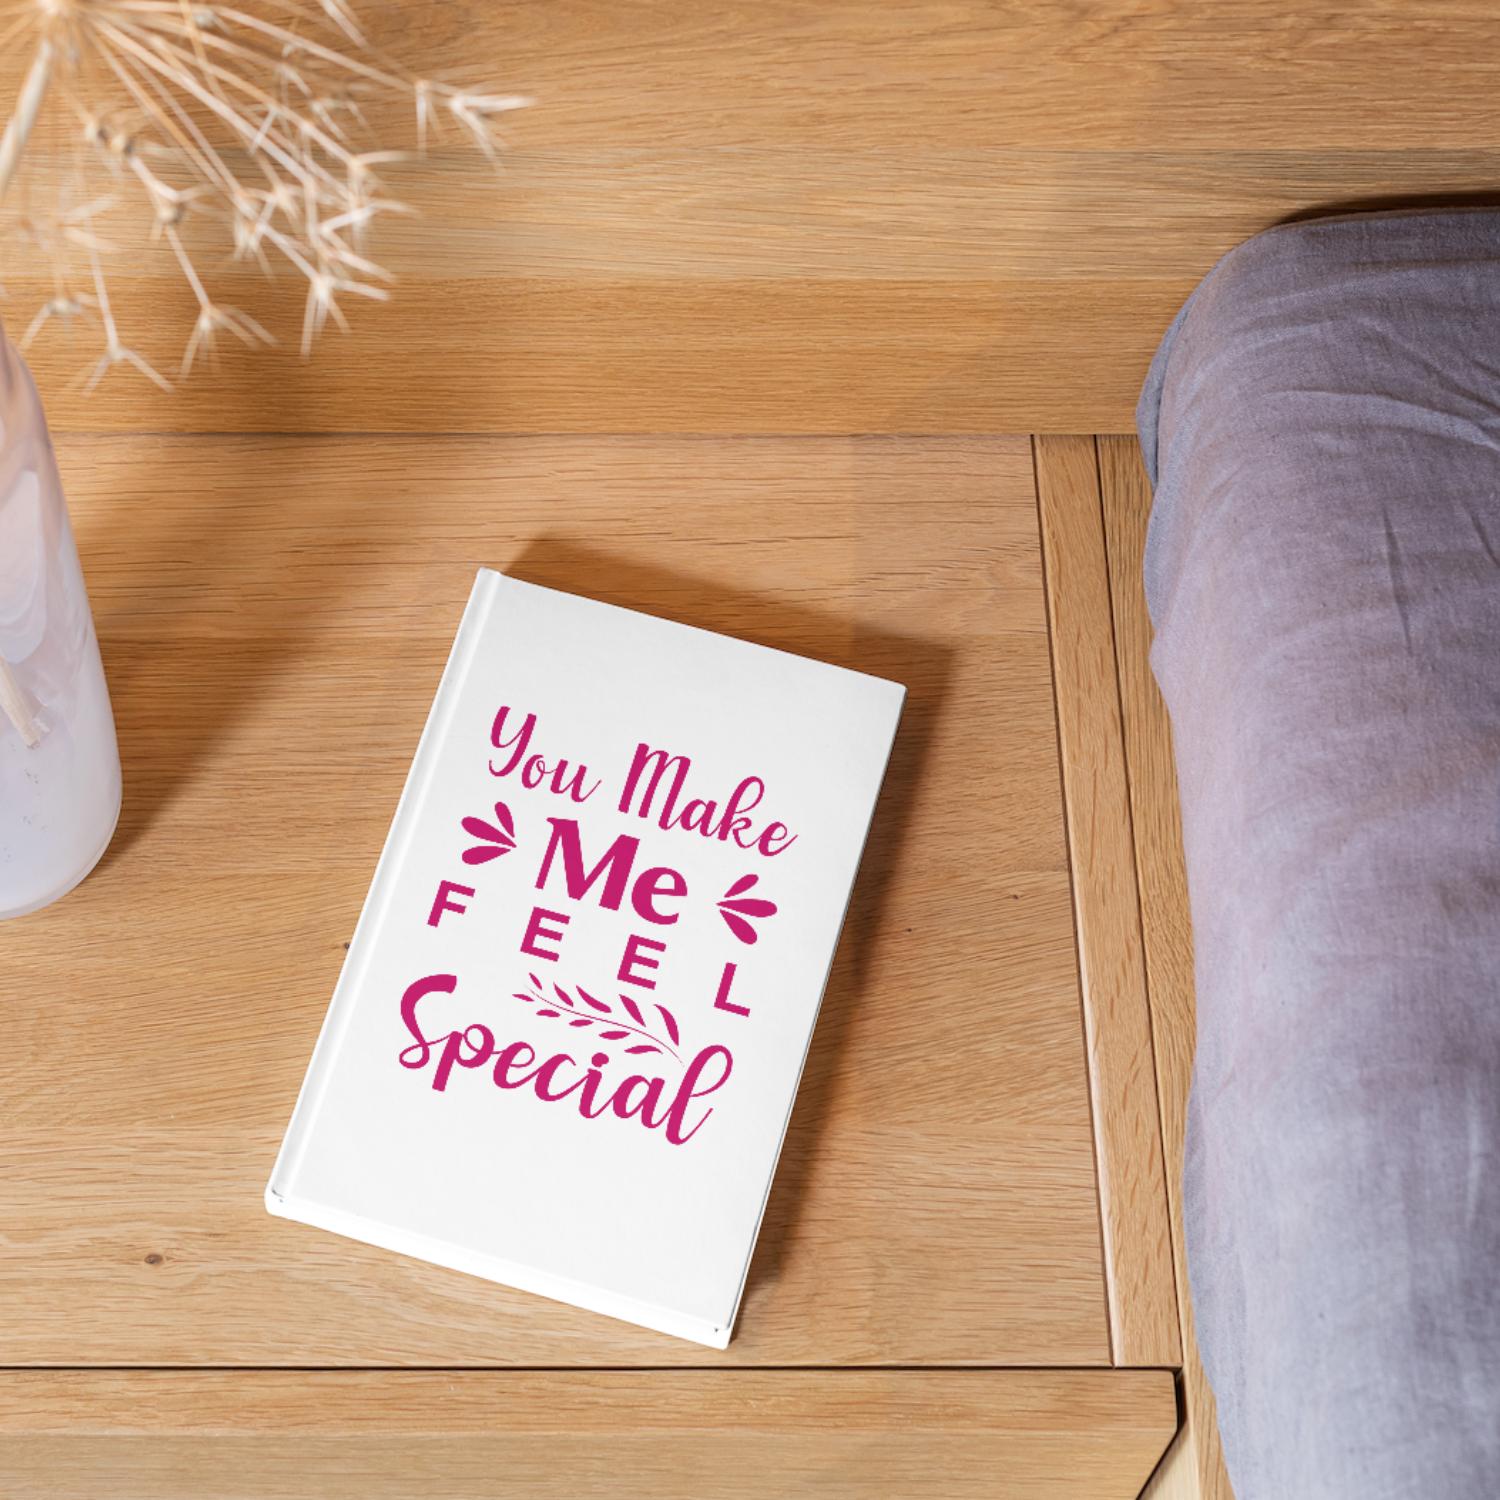 You make me feel special SVG | Digital Download | Cut File | SVG Only The Sweet Stuff